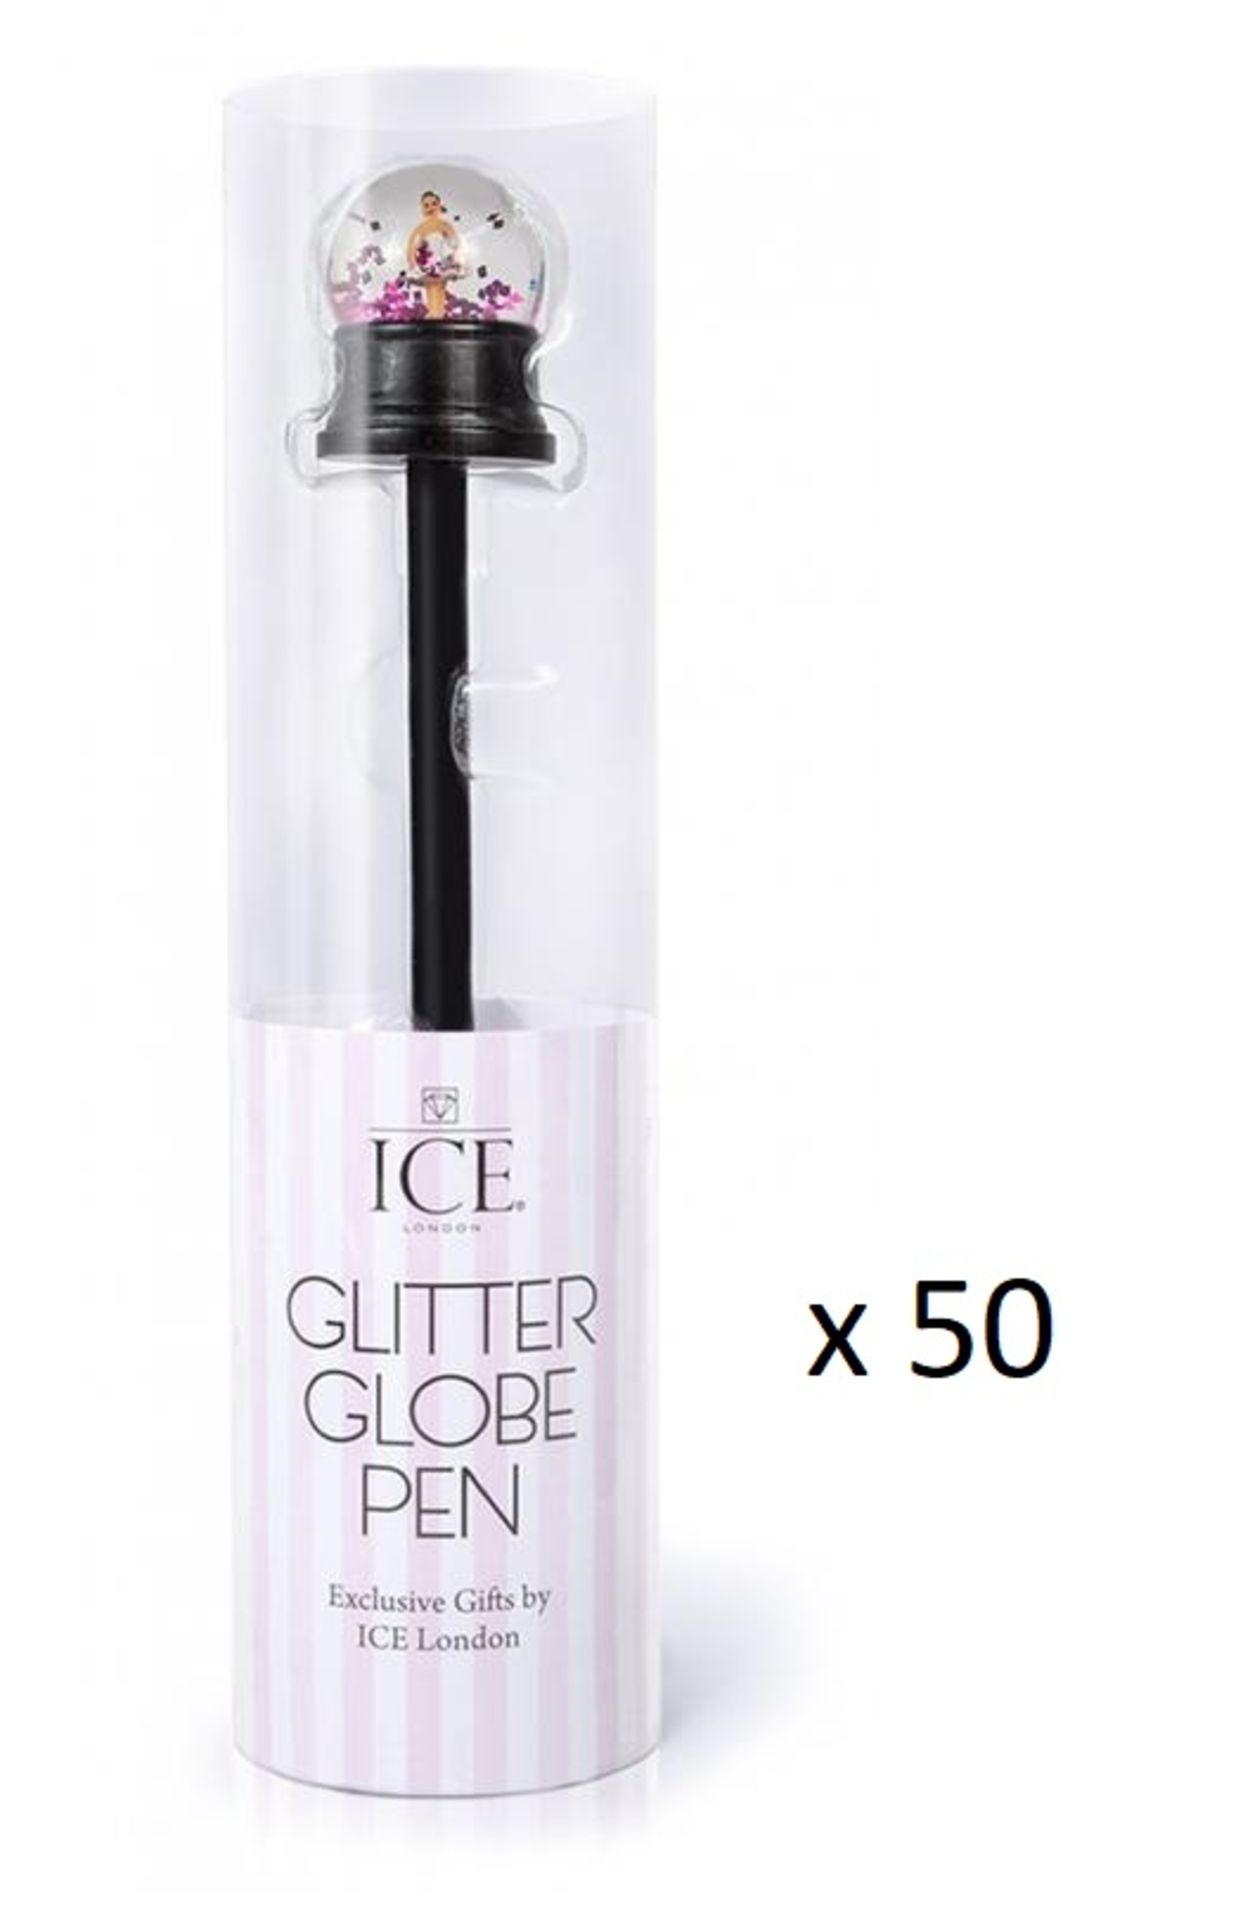 50 x ICE London Christmas "Ballerina" Glitter Globe Pens - Brand New Sealed Stock - Ideal Stocking